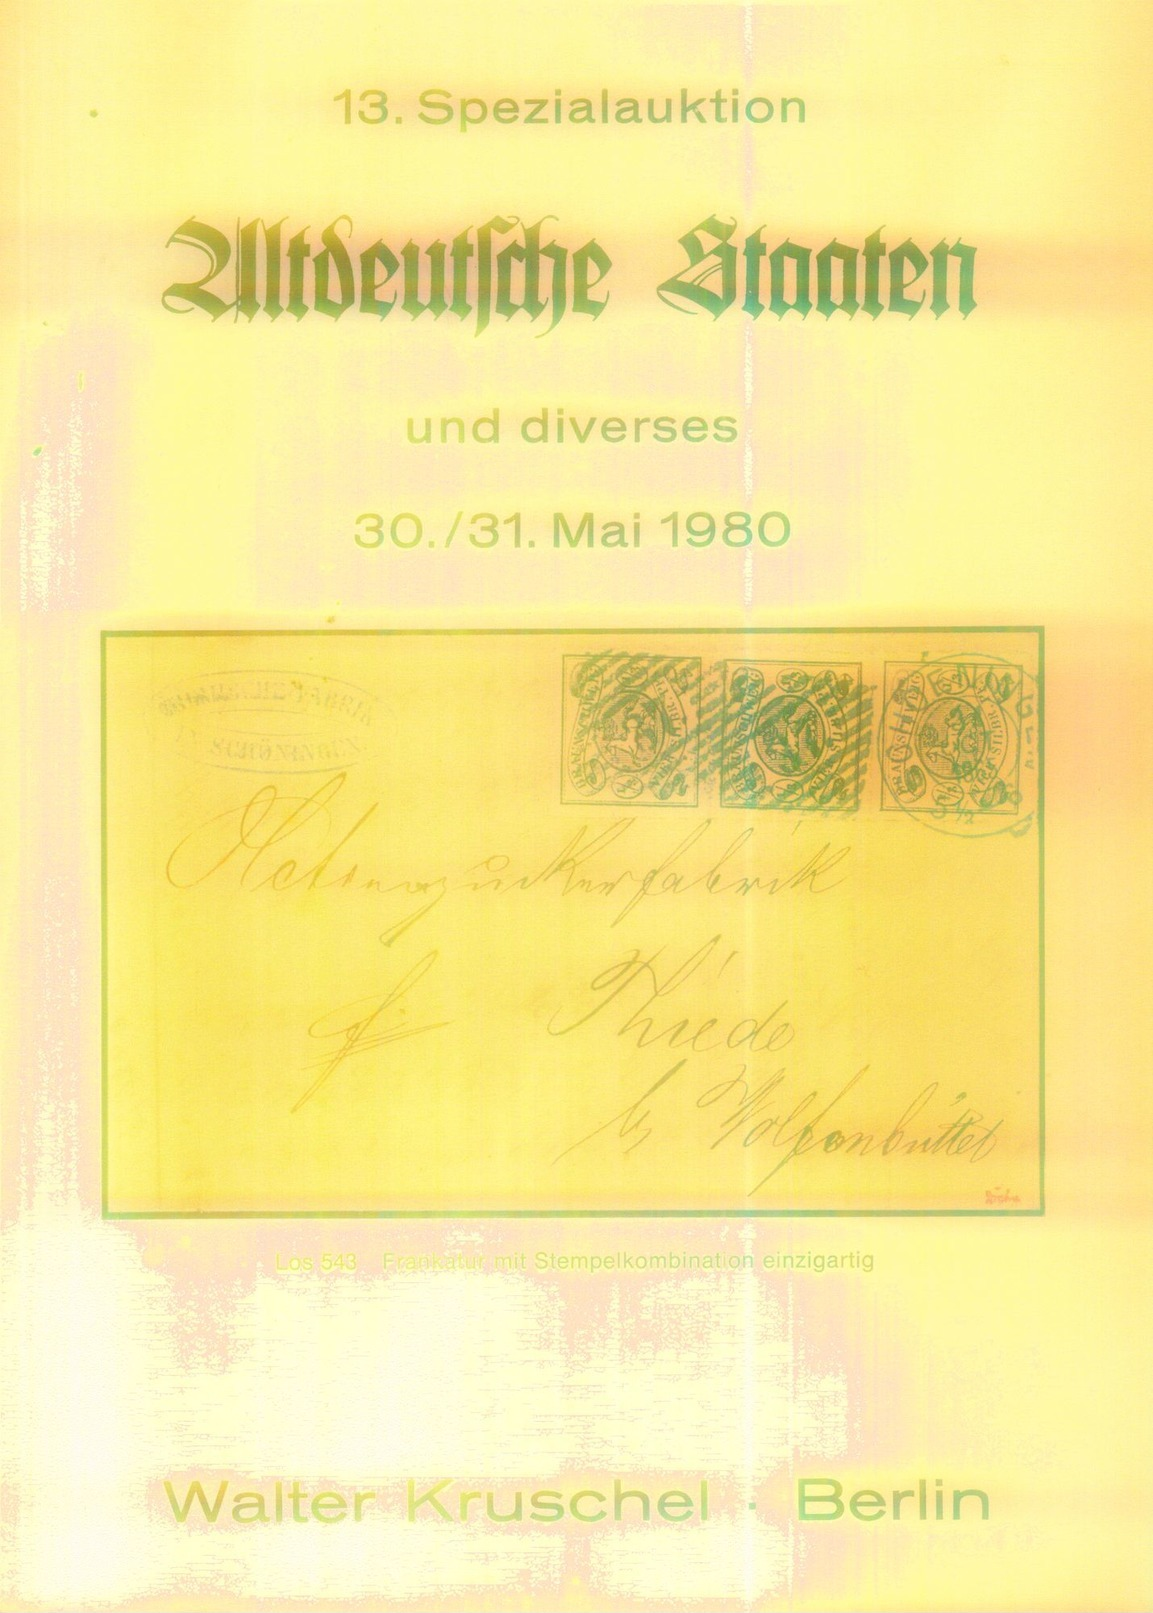 13. Kruschel Auktion 1980 - Altdeutsche Staaten - Catalogues For Auction Houses